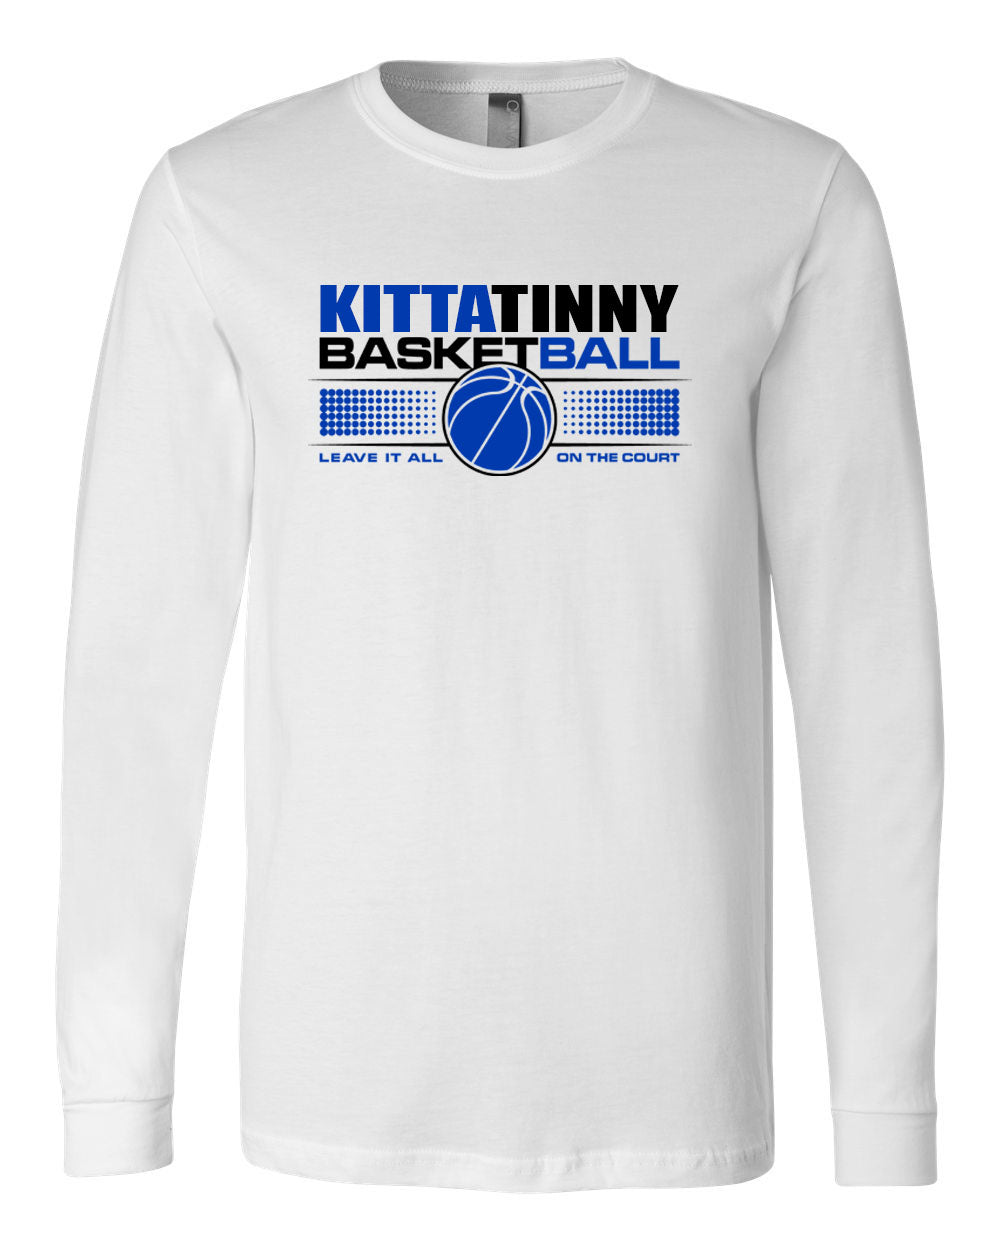 Kittatinny Basketball Design 1 Long Sleeve Shirt